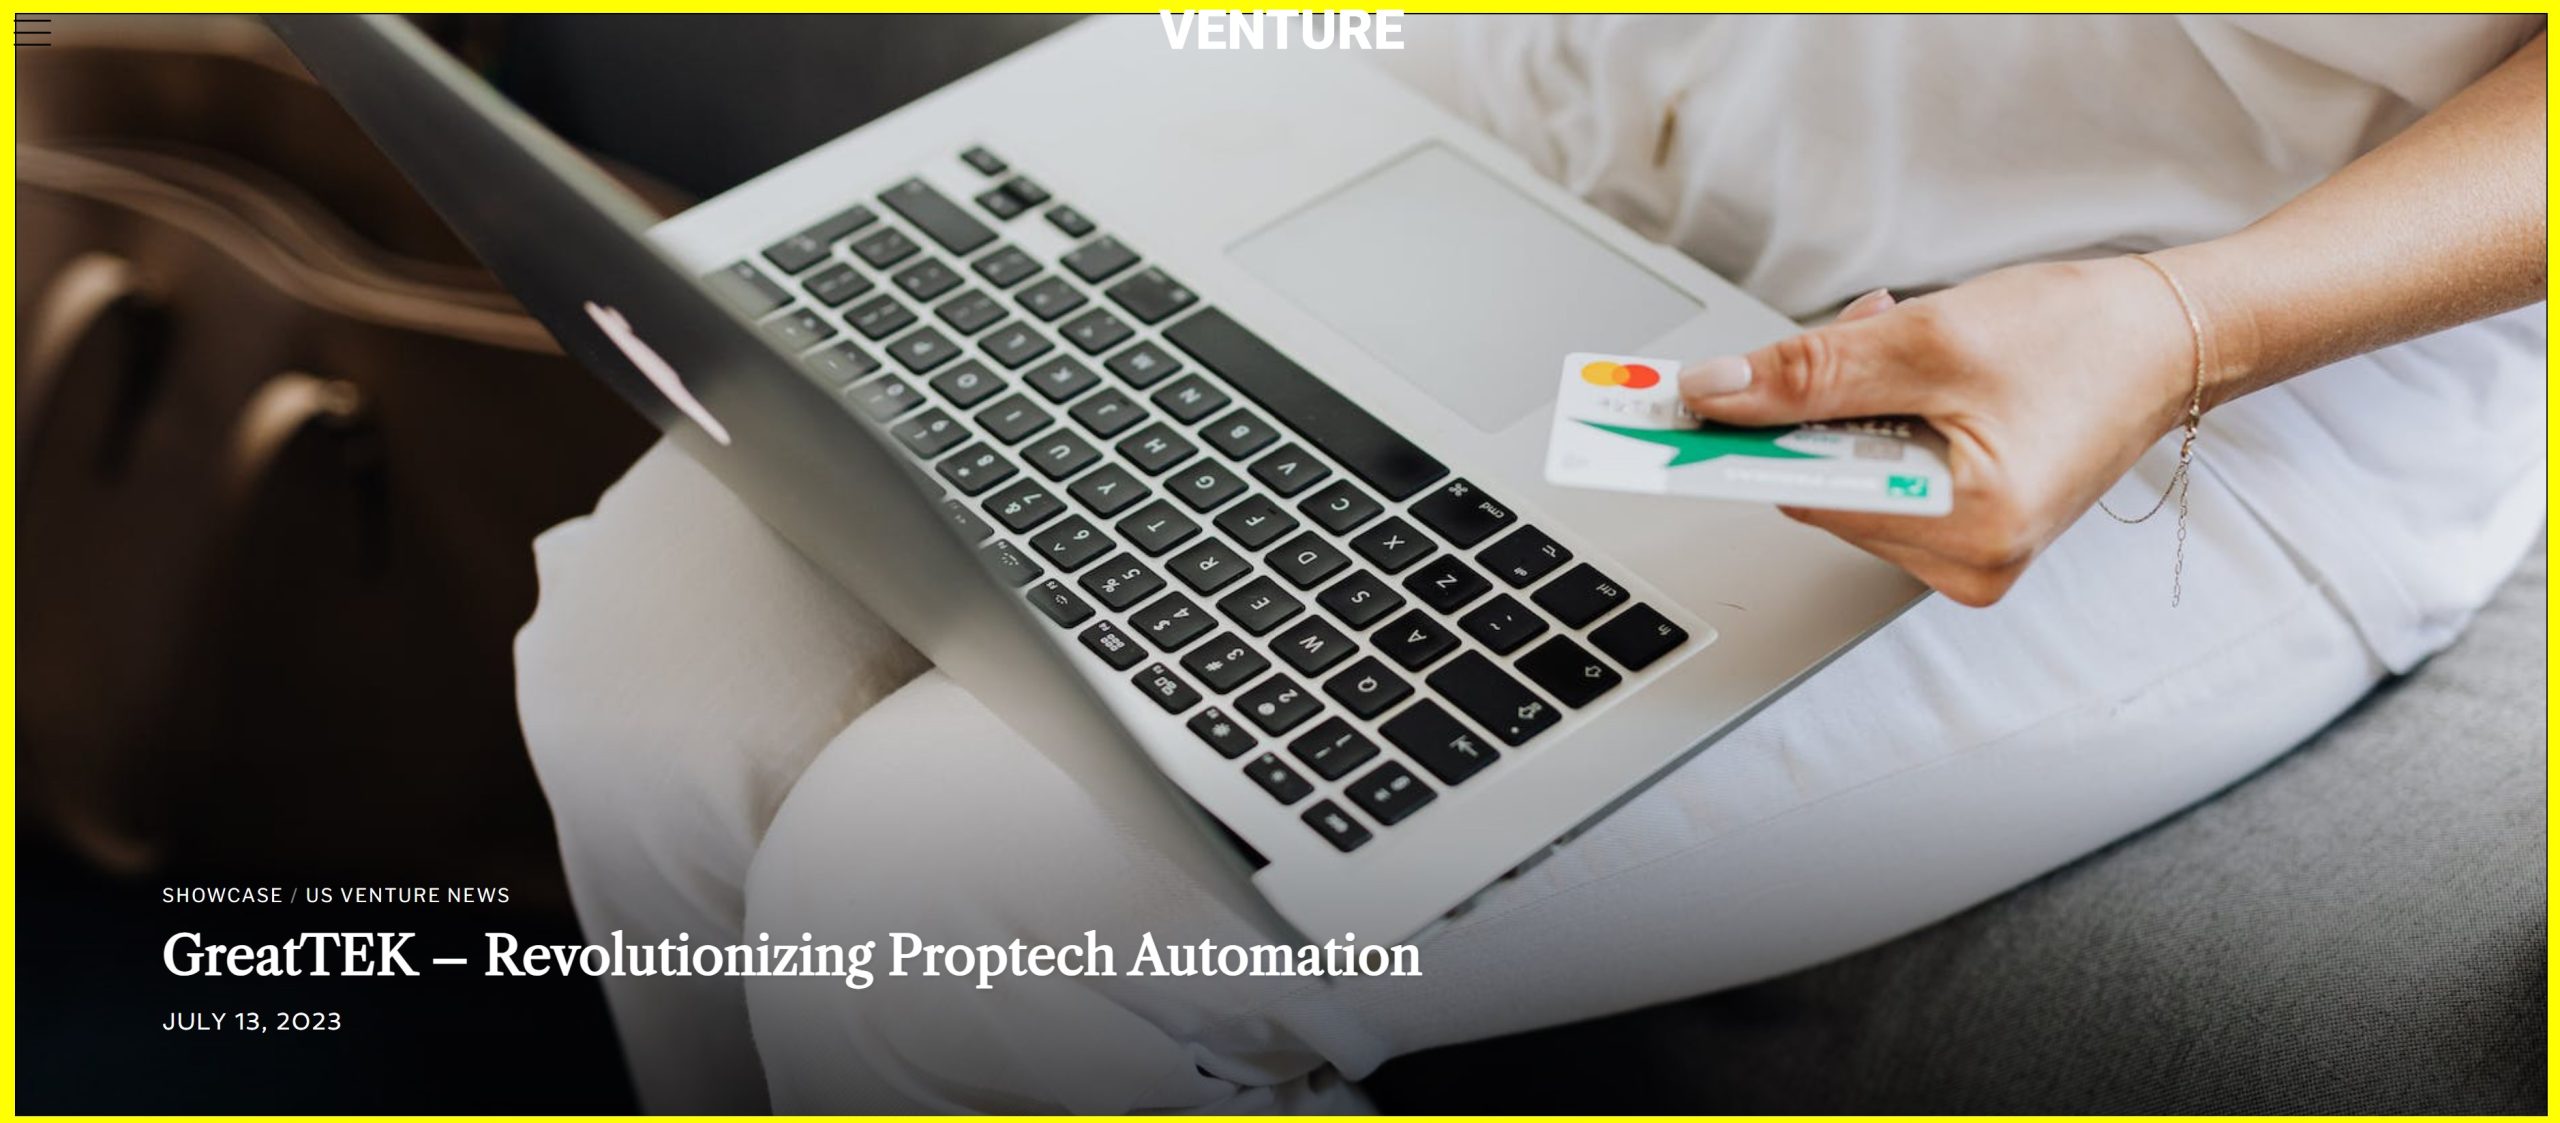 venture-greattek-revolutionizing-proptech-automation